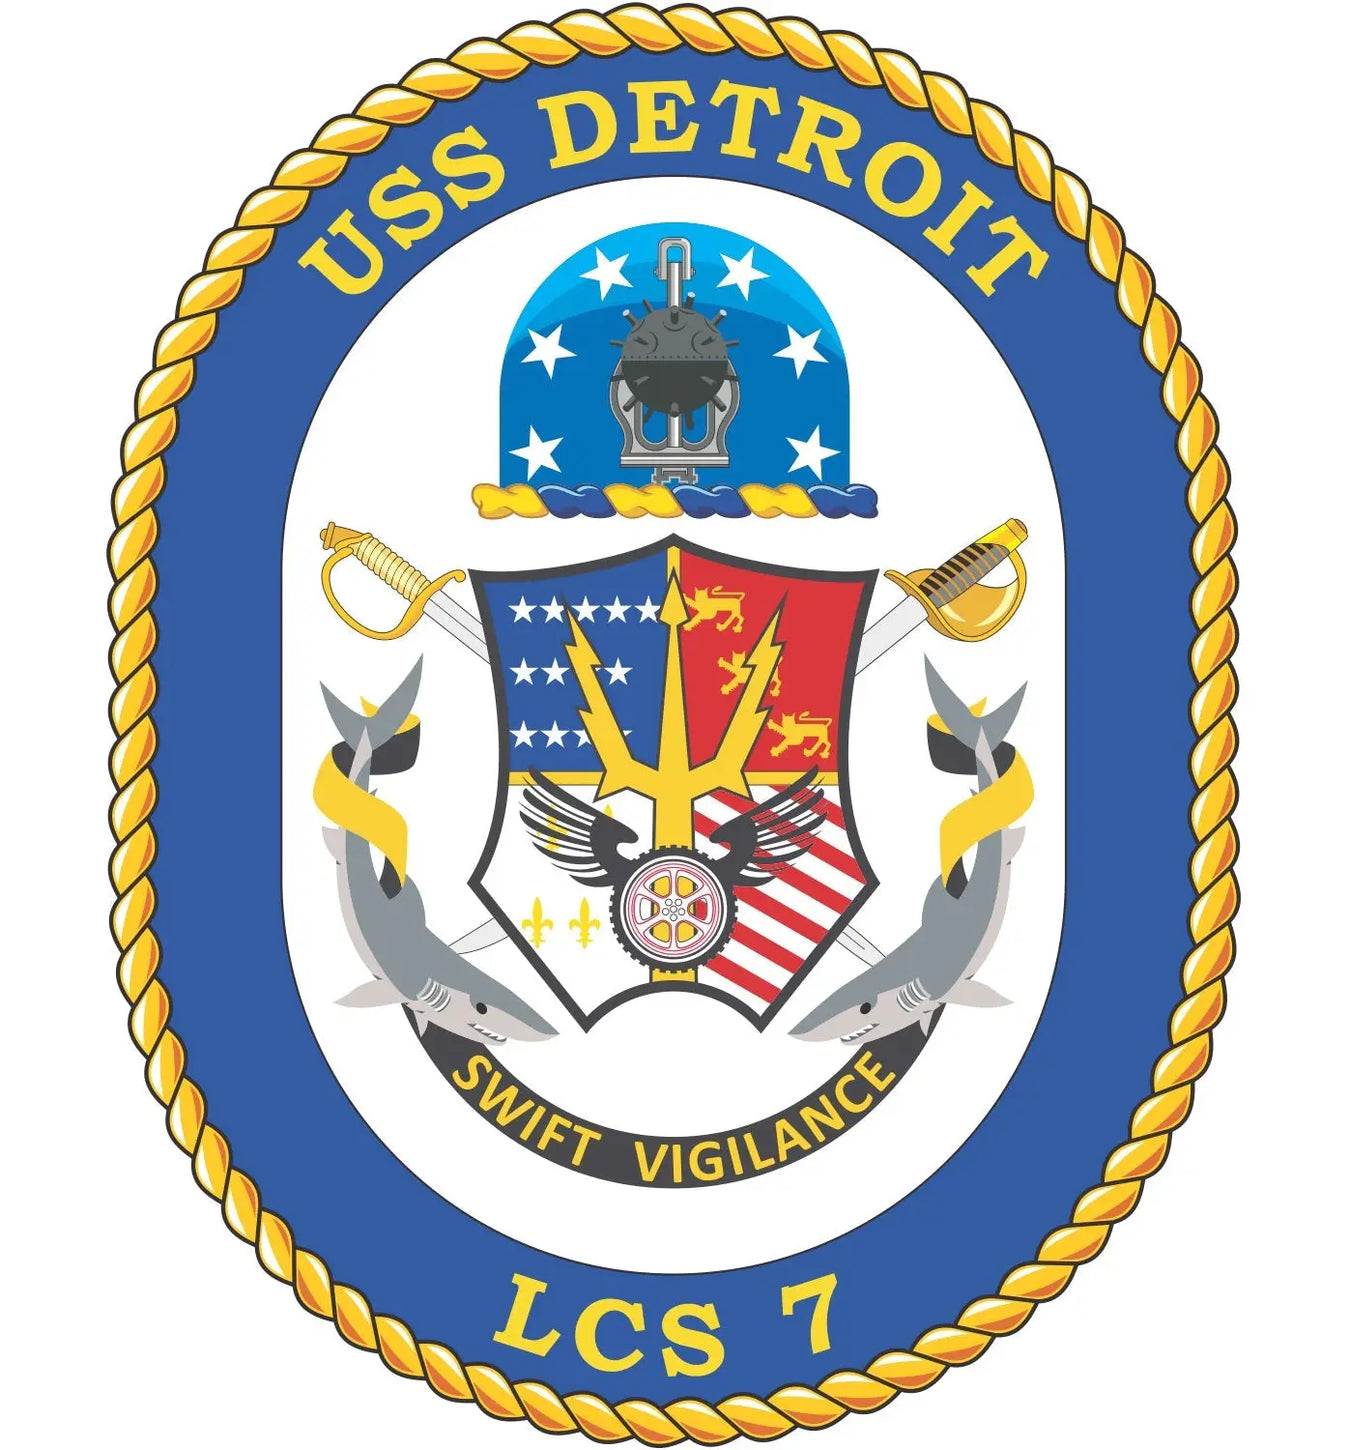 USS Detroit (LCS-7)